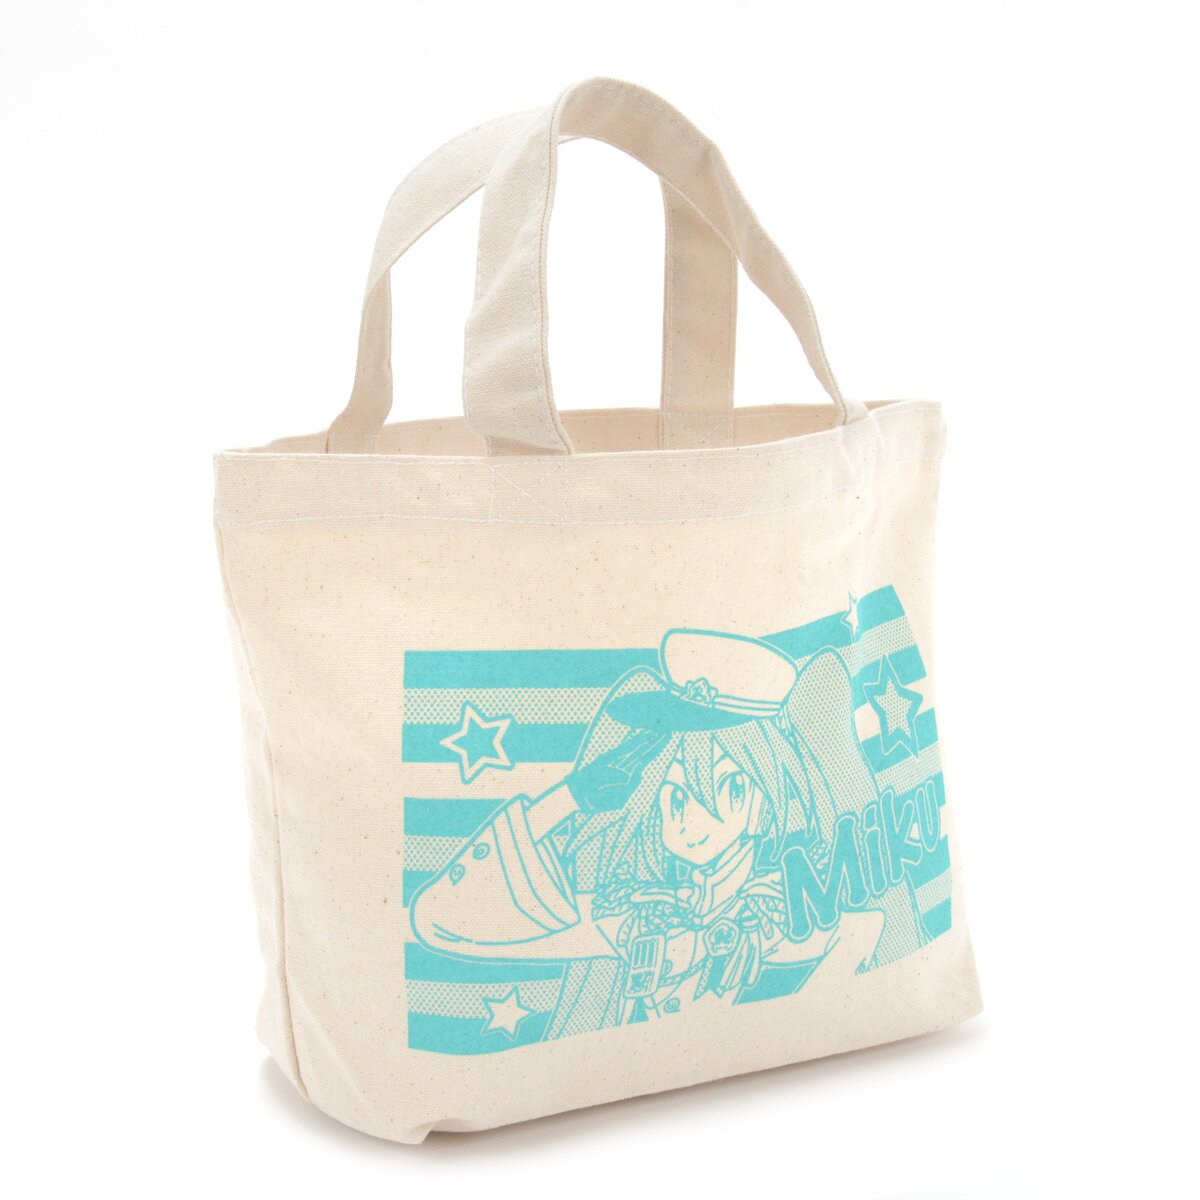 Vocaloid Lunch Tote Bags - Tokyo Otaku Mode (TOM)